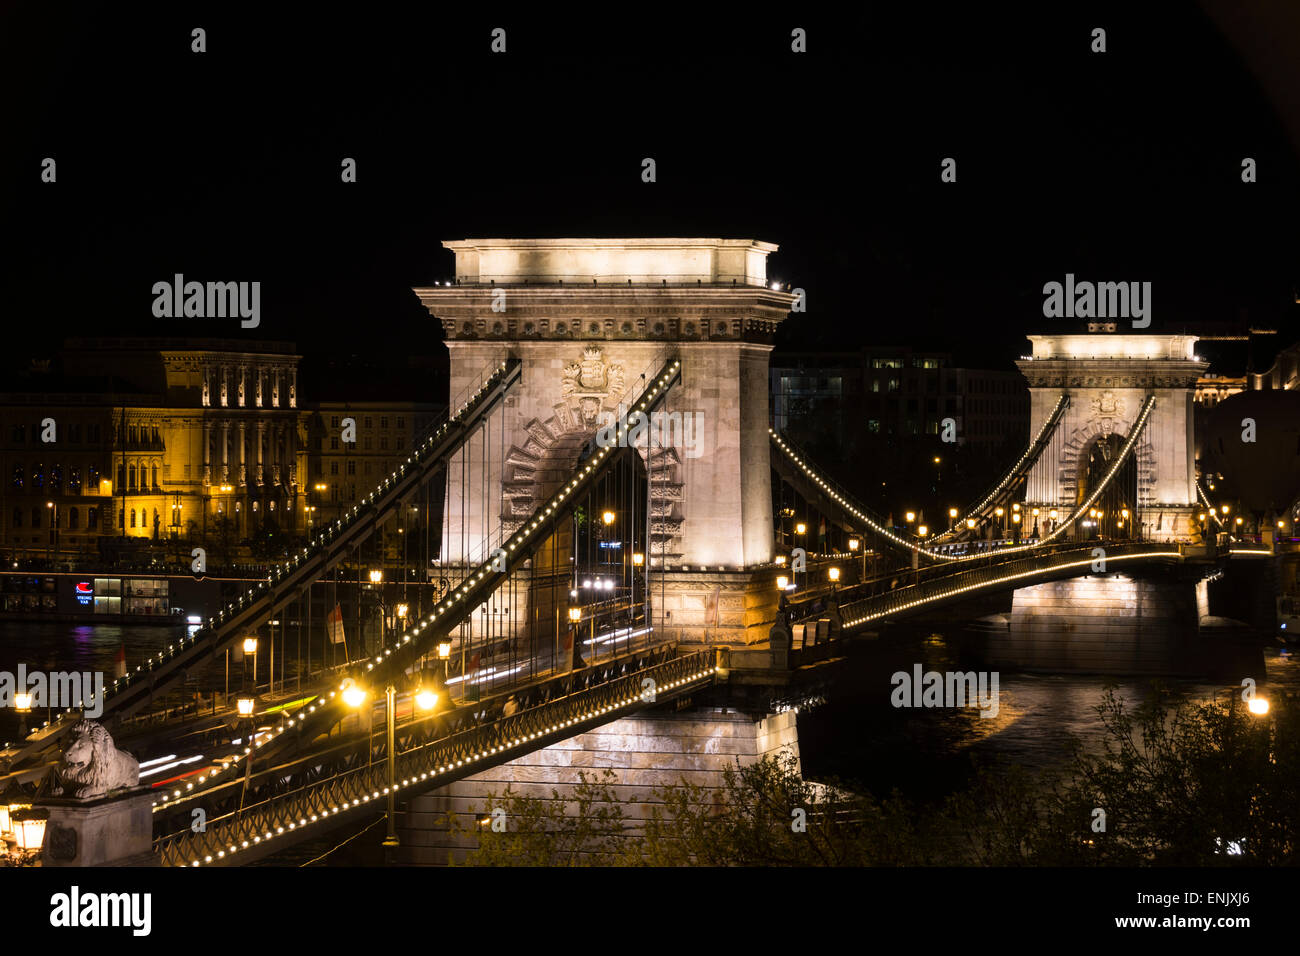 Chain Bridge in Budapest lit up at night Stock Photo